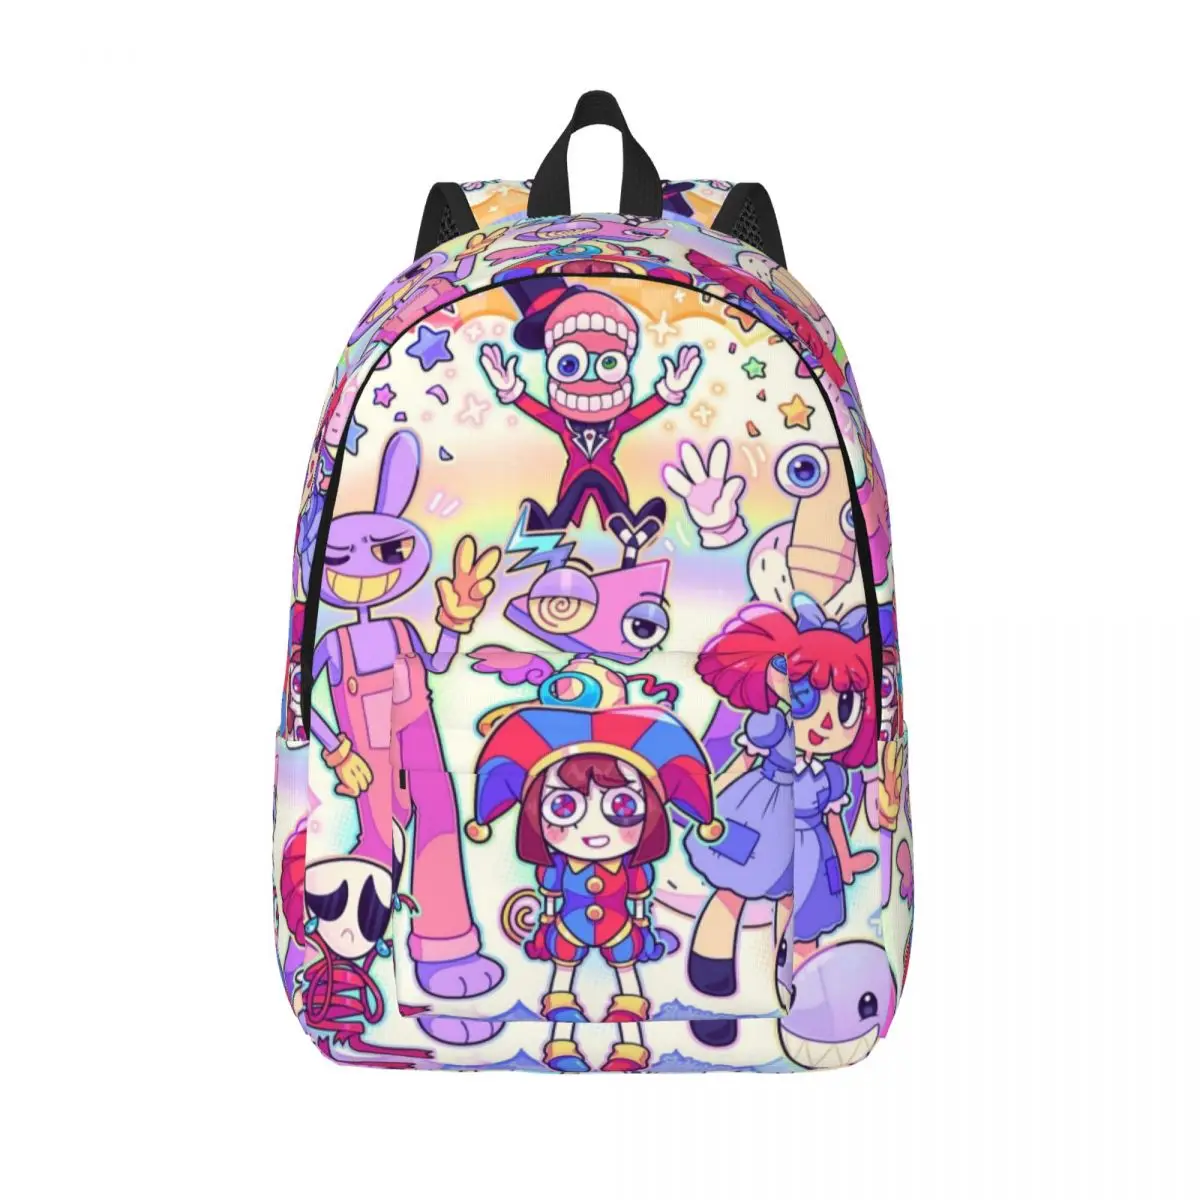 The Amazing Digital Circus Backpack for Boy Girl Kids Student School Book Bags Pomni Jax Daypack Preschool Primary Bag Outdoor